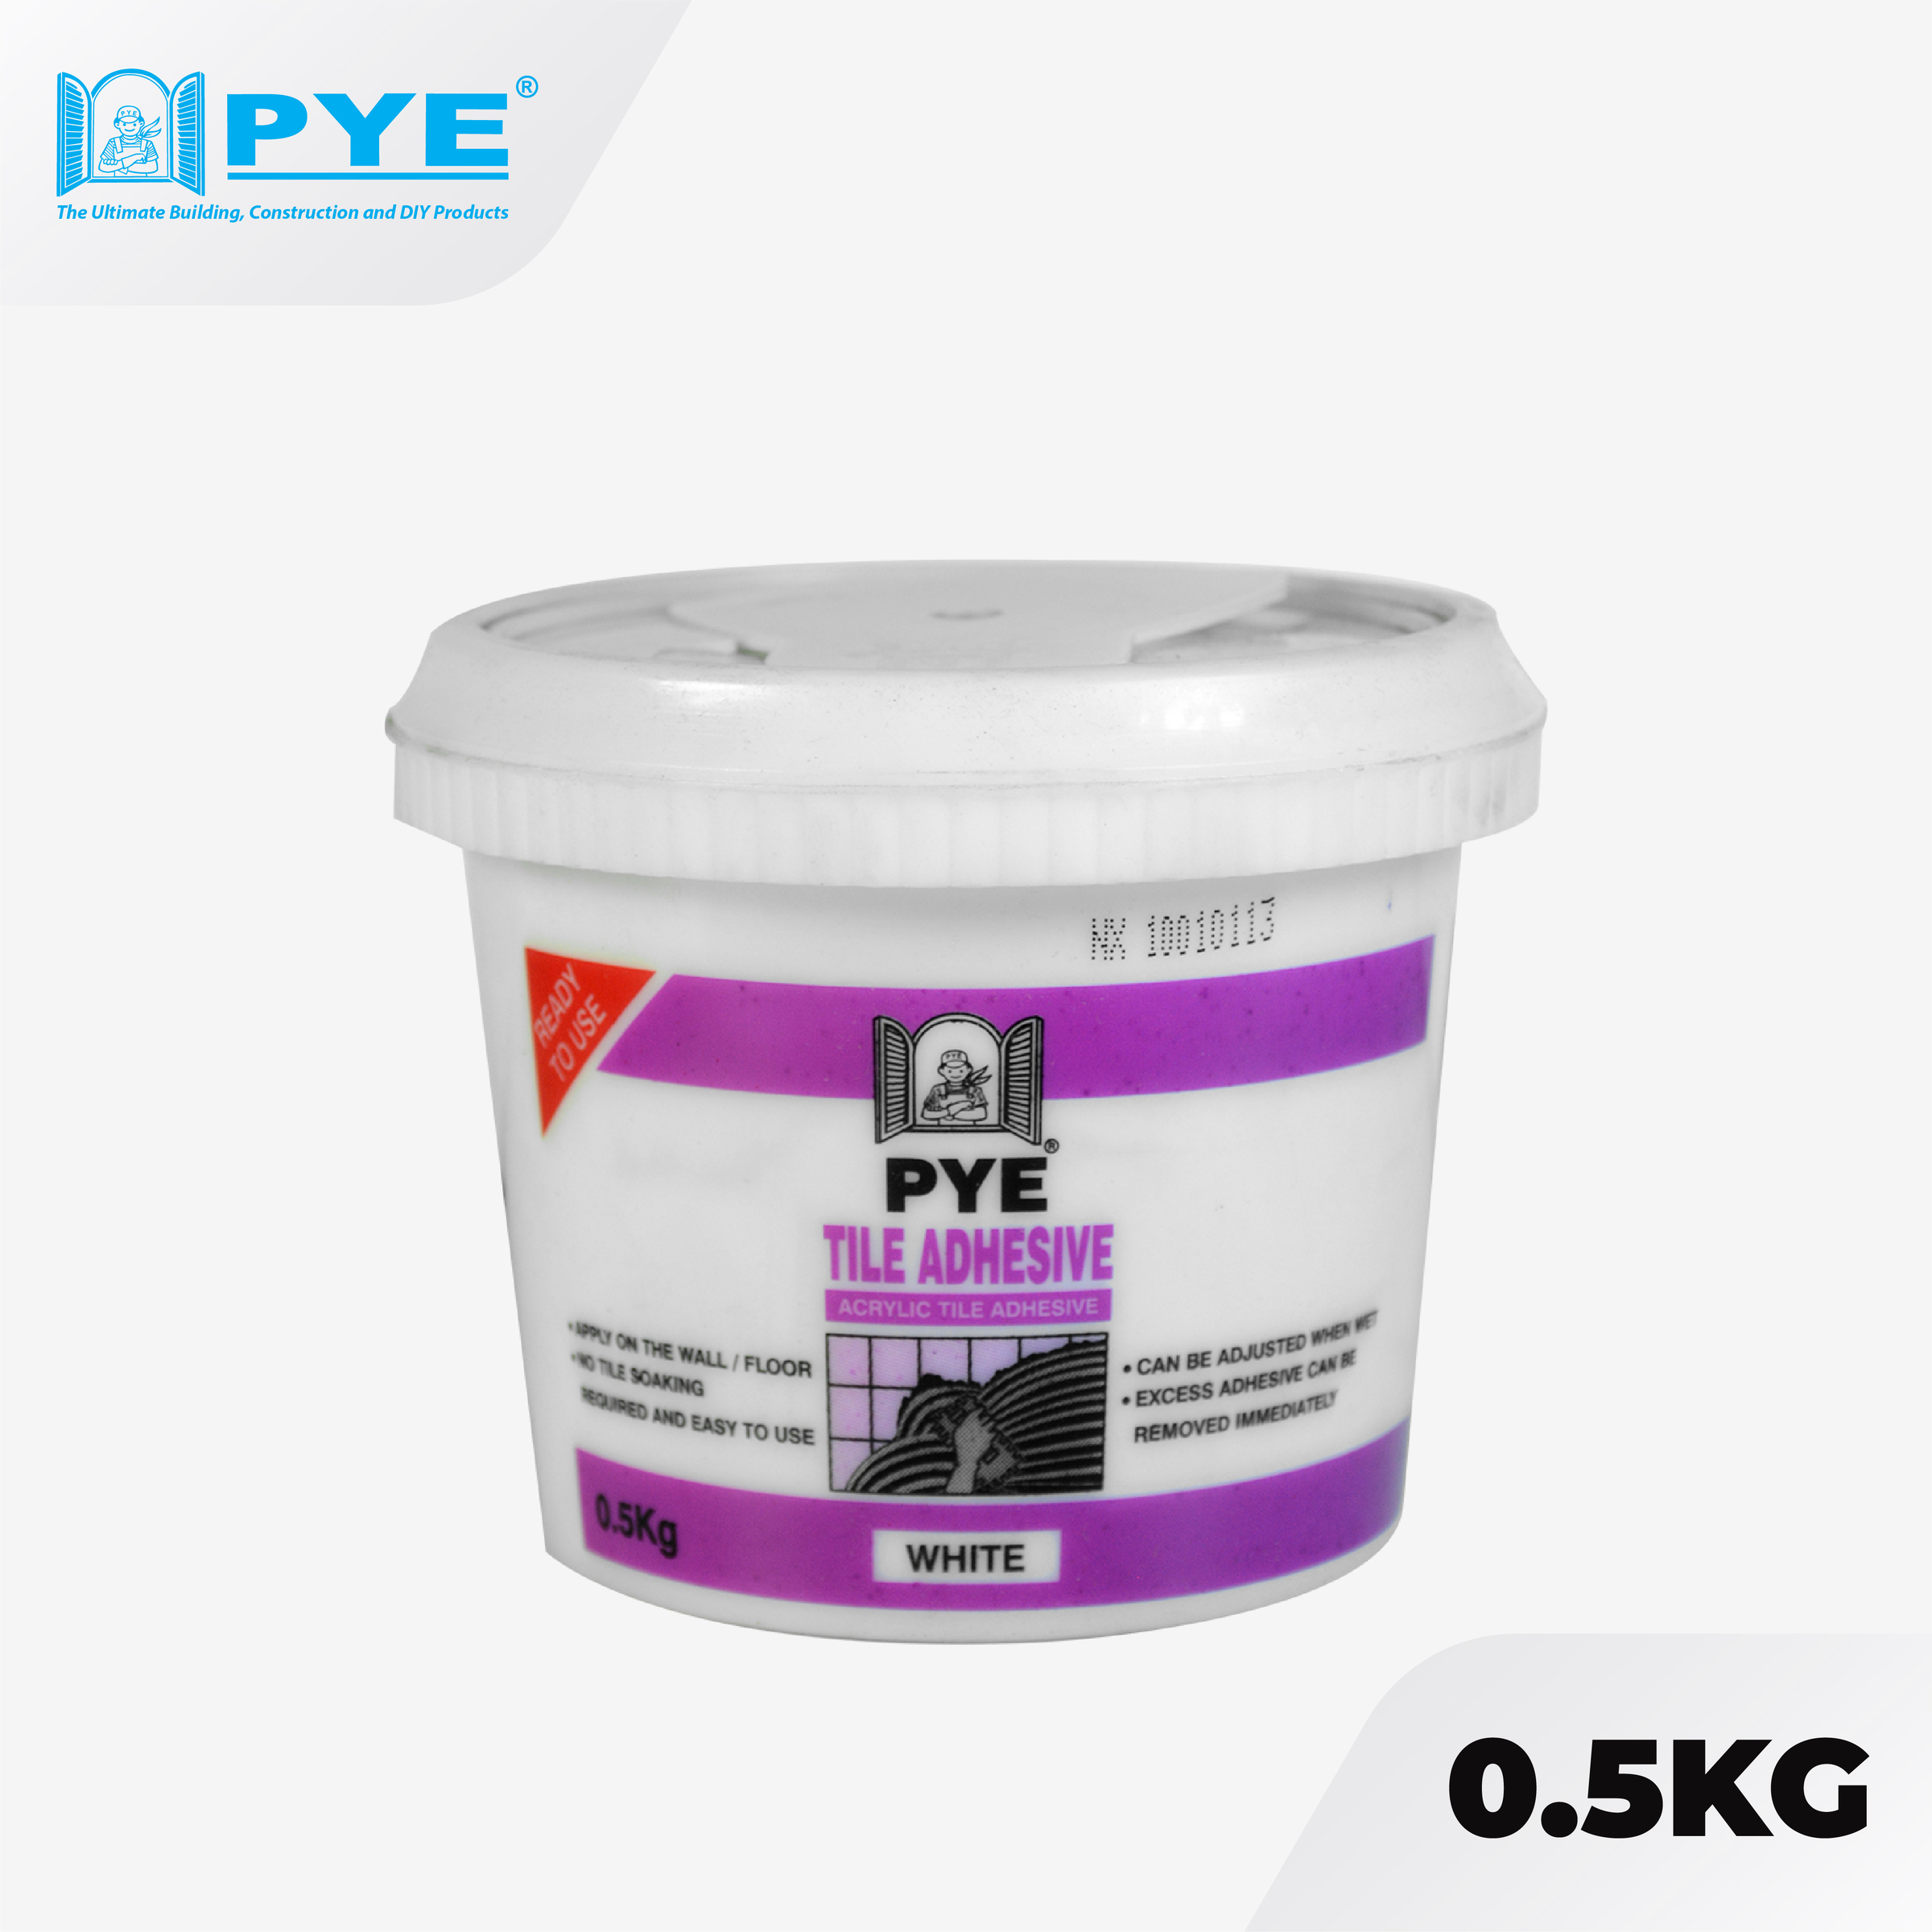 PYE Tile Adhesive 0.5kg